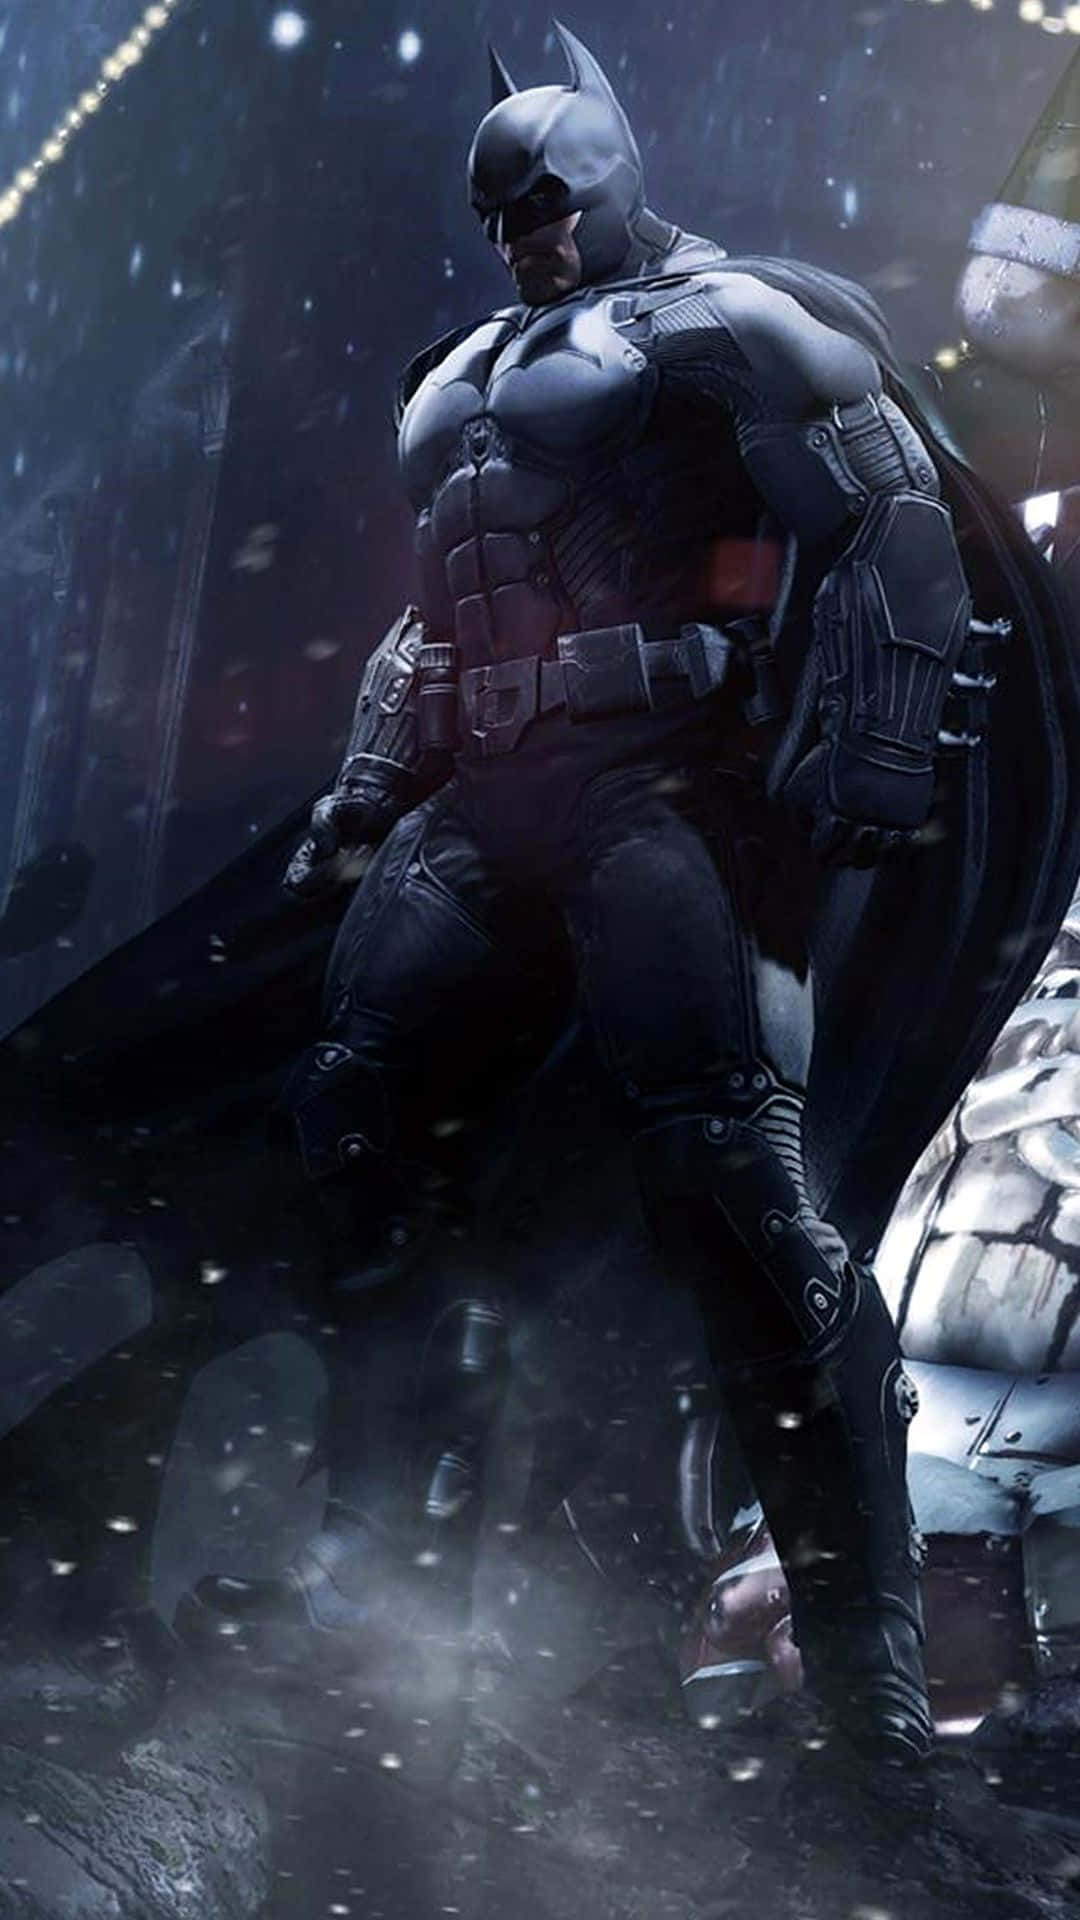 Batman in combat mode Wallpaper